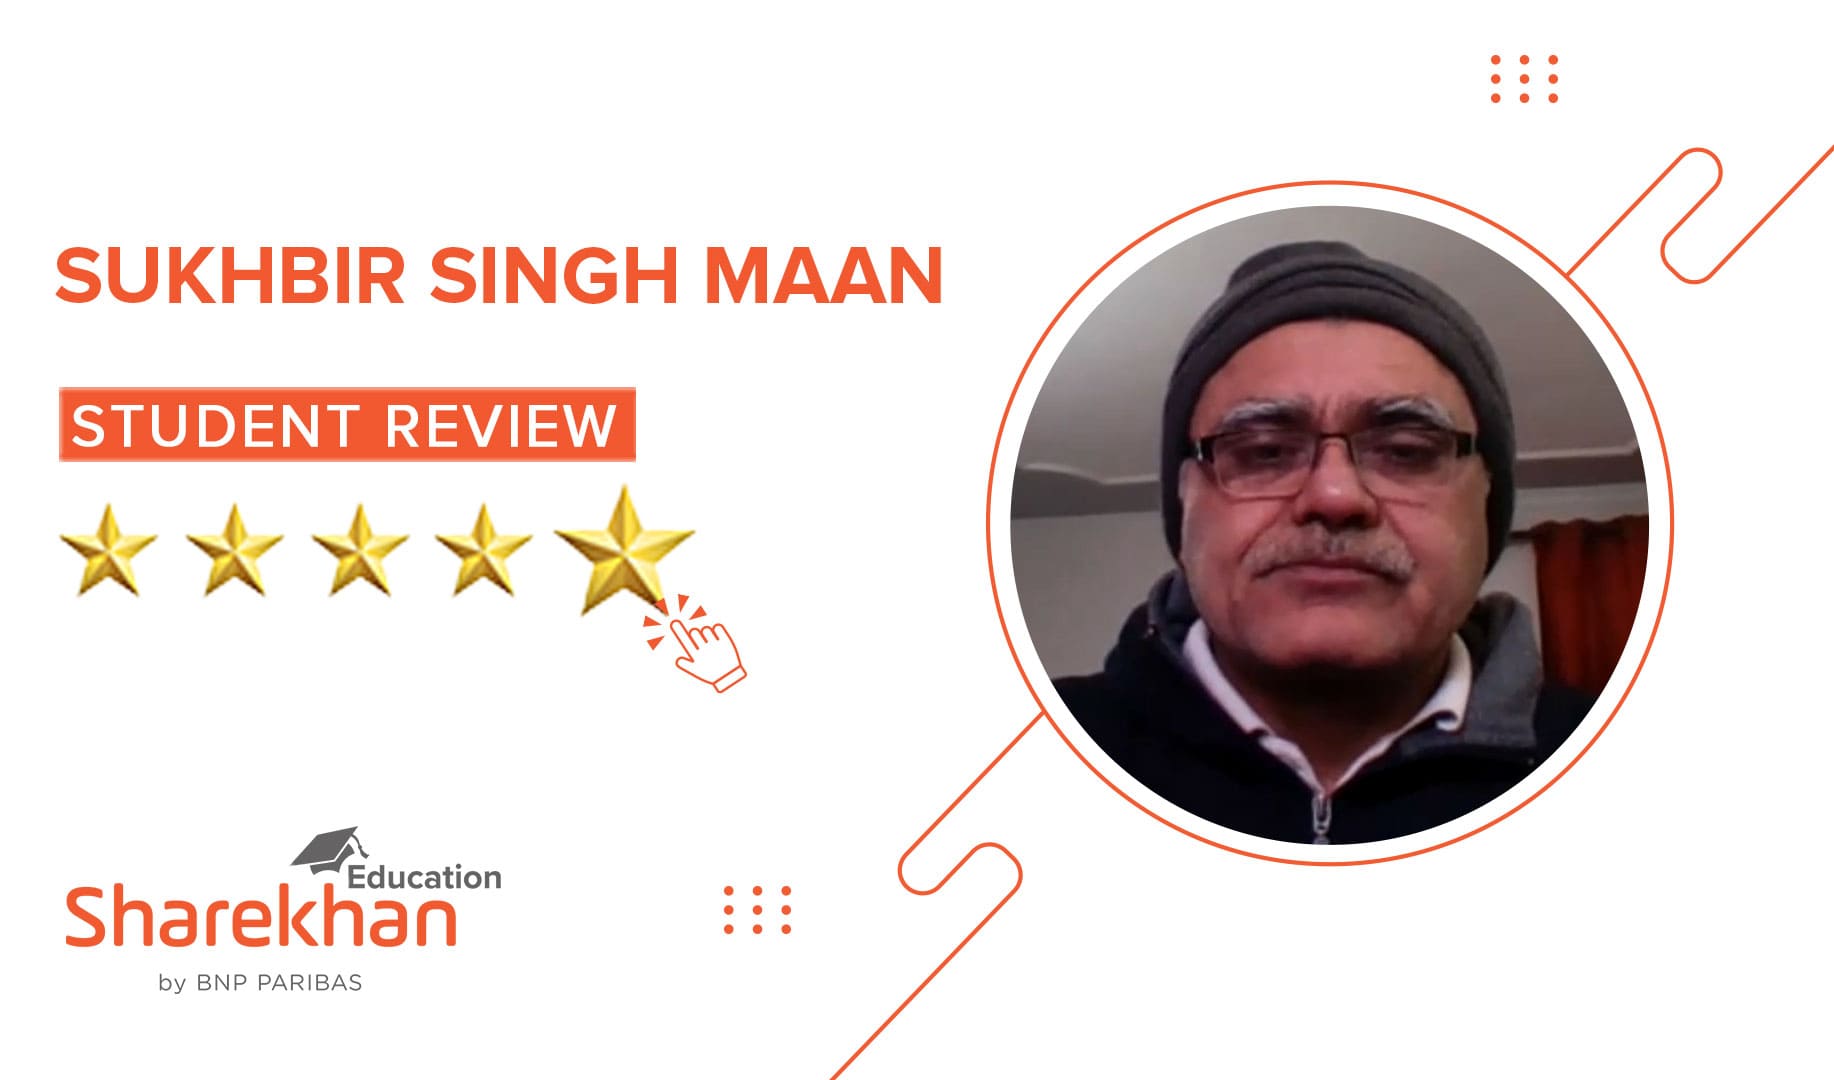 Sharekhan Education Review by Sukhbir Singh Maan